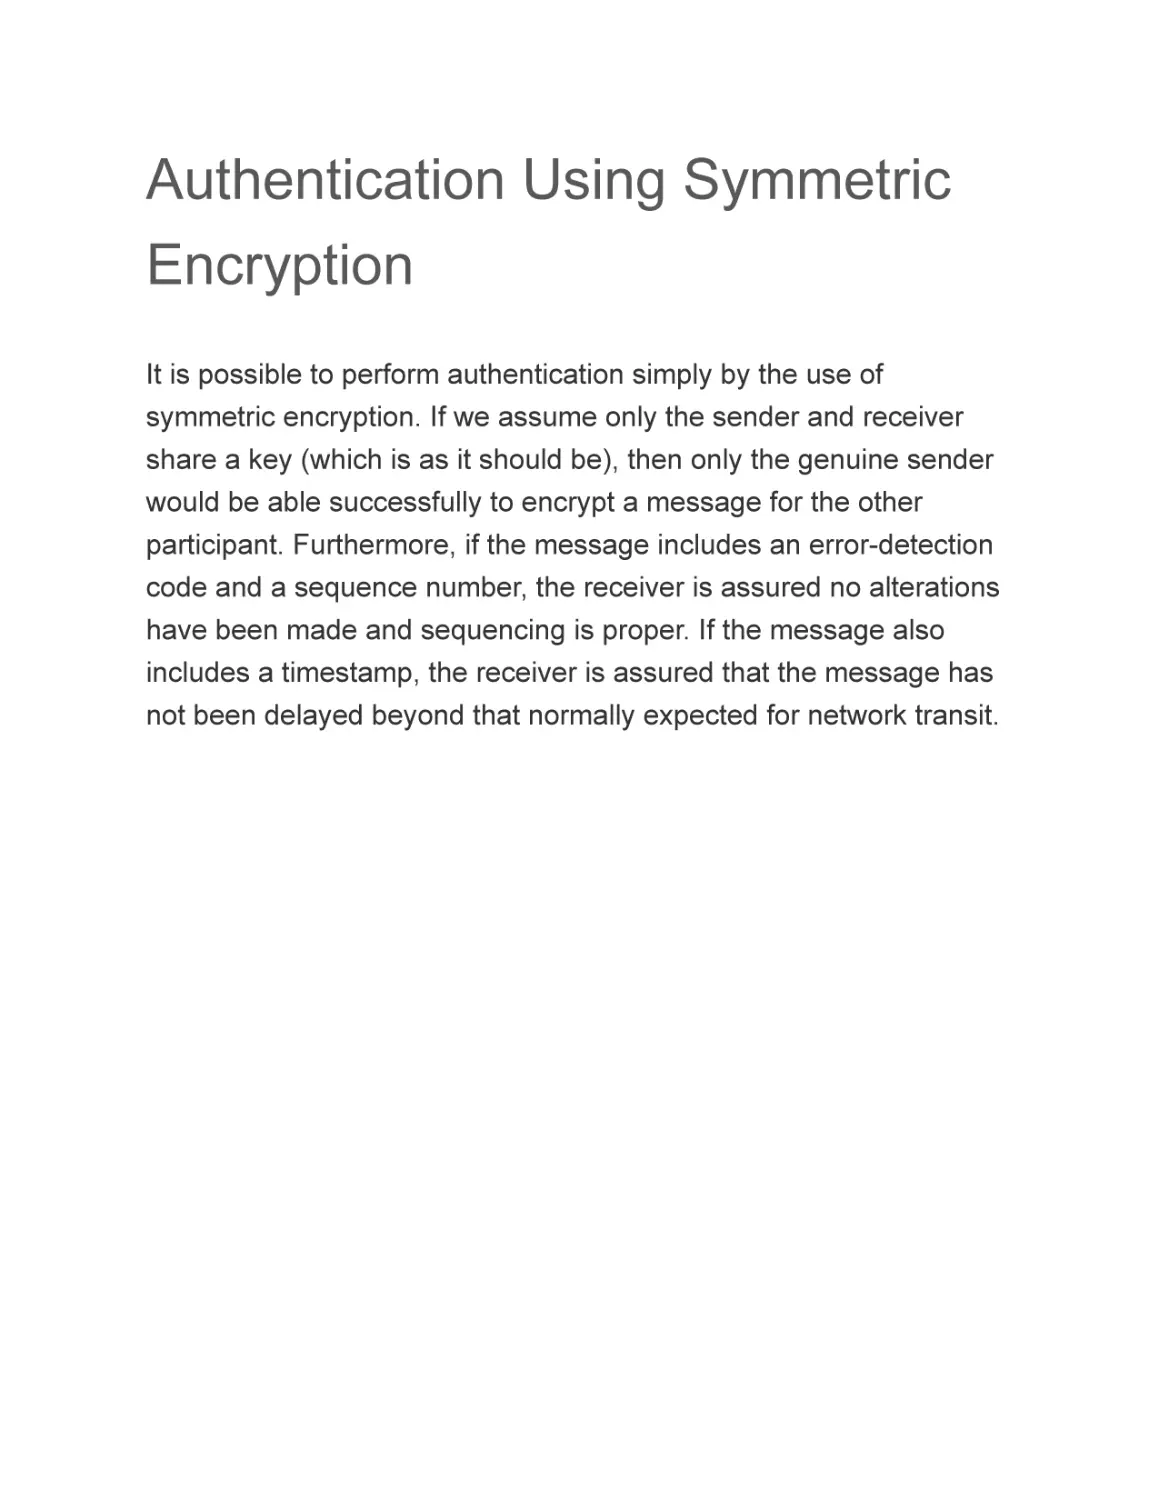 Authentication Using Symmetric Encryption